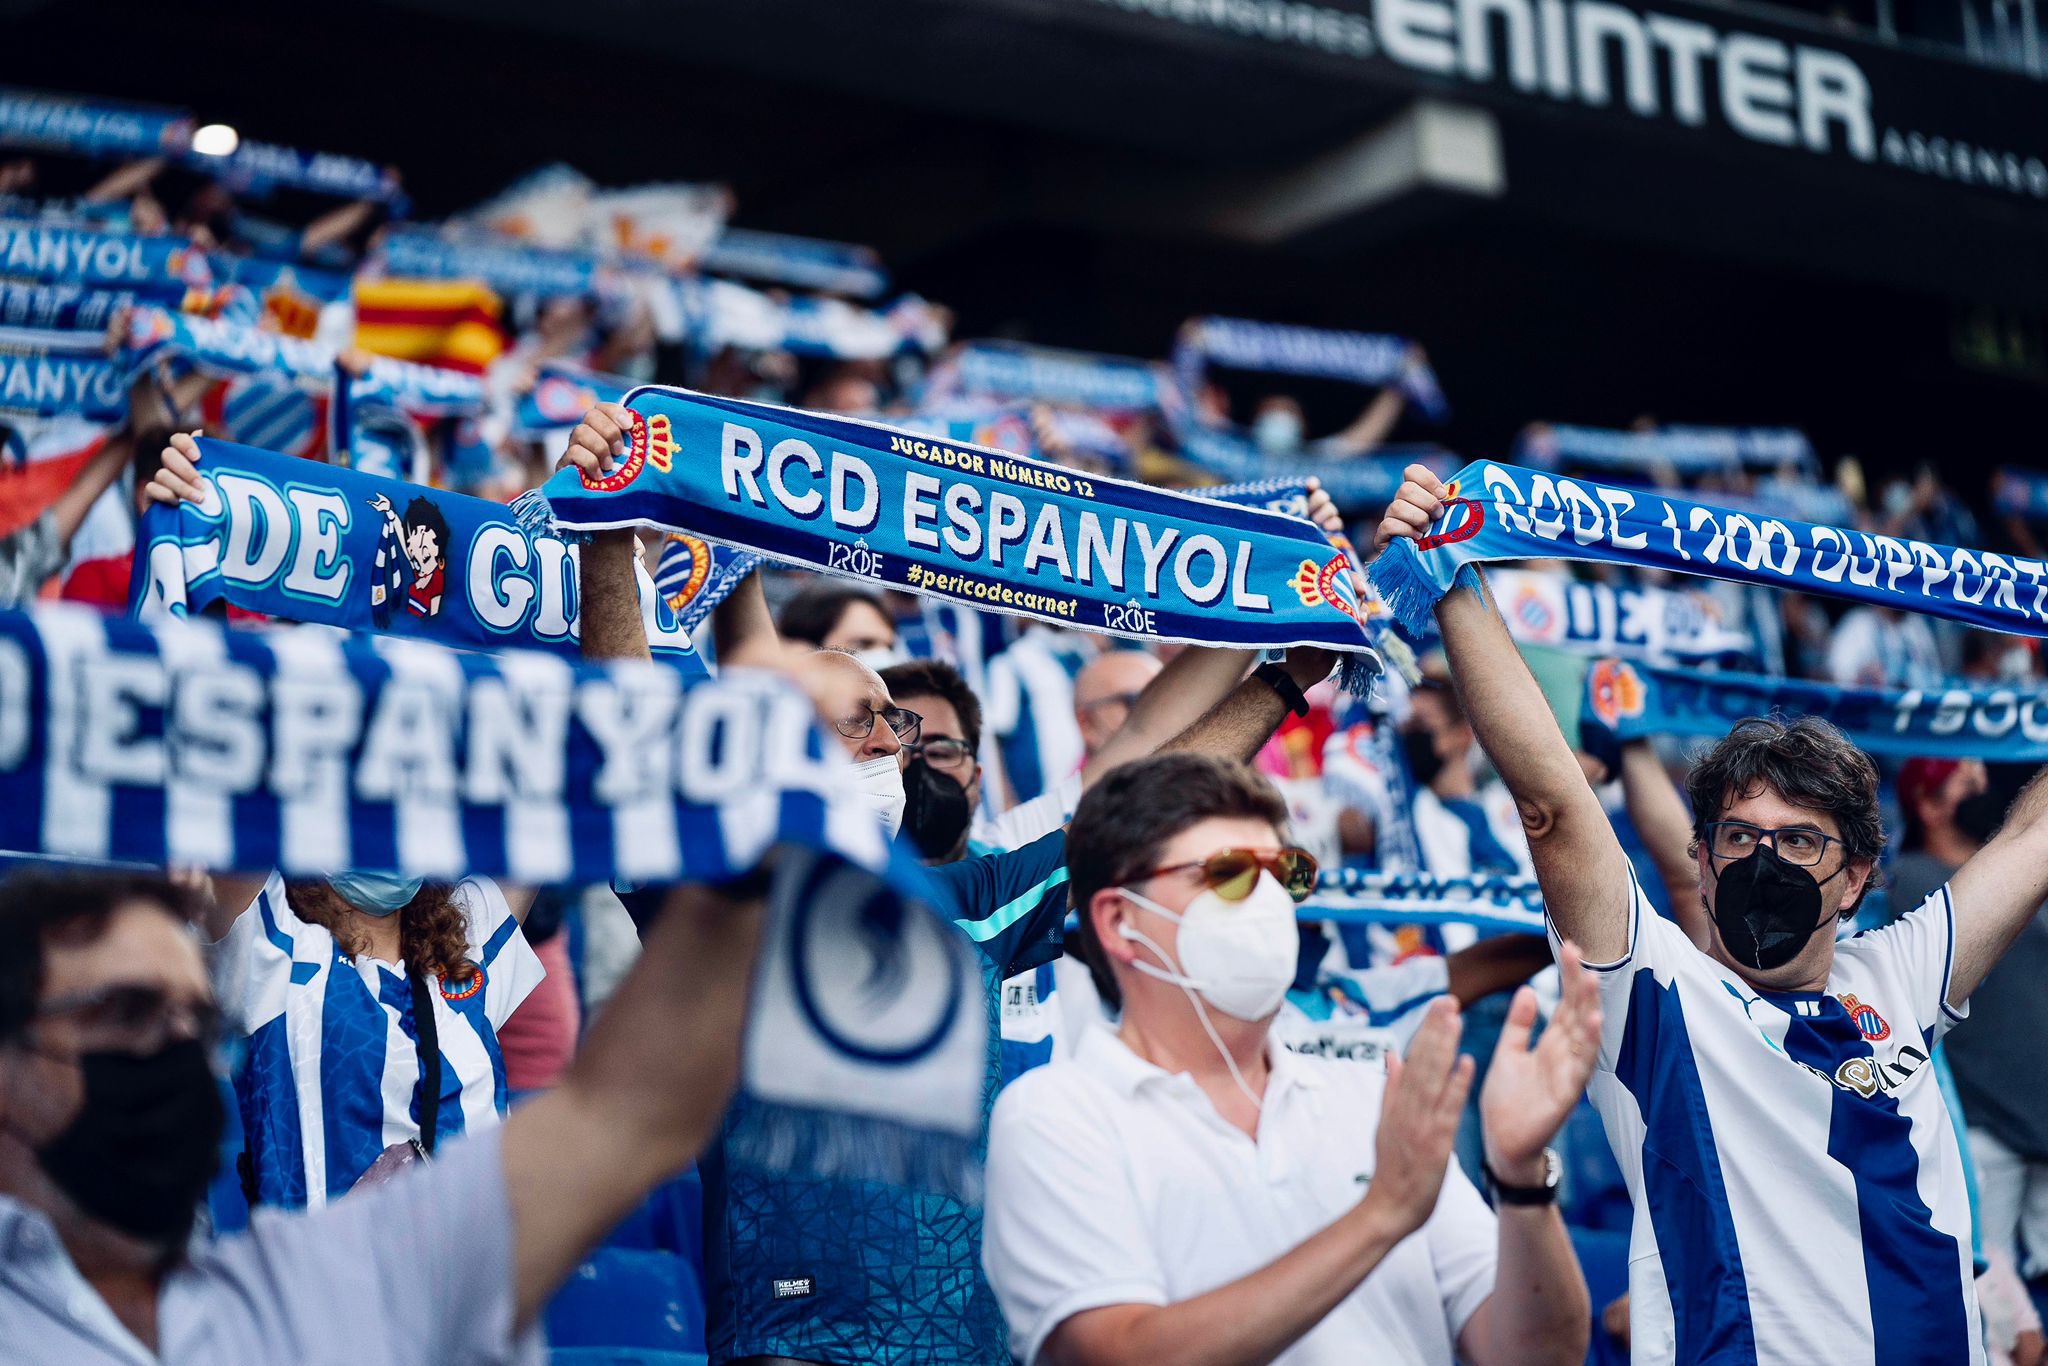 RCD Espanyol de Barcelona Twitter: "Centrats en Sortirem a guanyar. en cada partit! 💪 #RCDE | #RCDMallorcaEspanyol https://t.co/FXcGNPxvmp" / Twitter